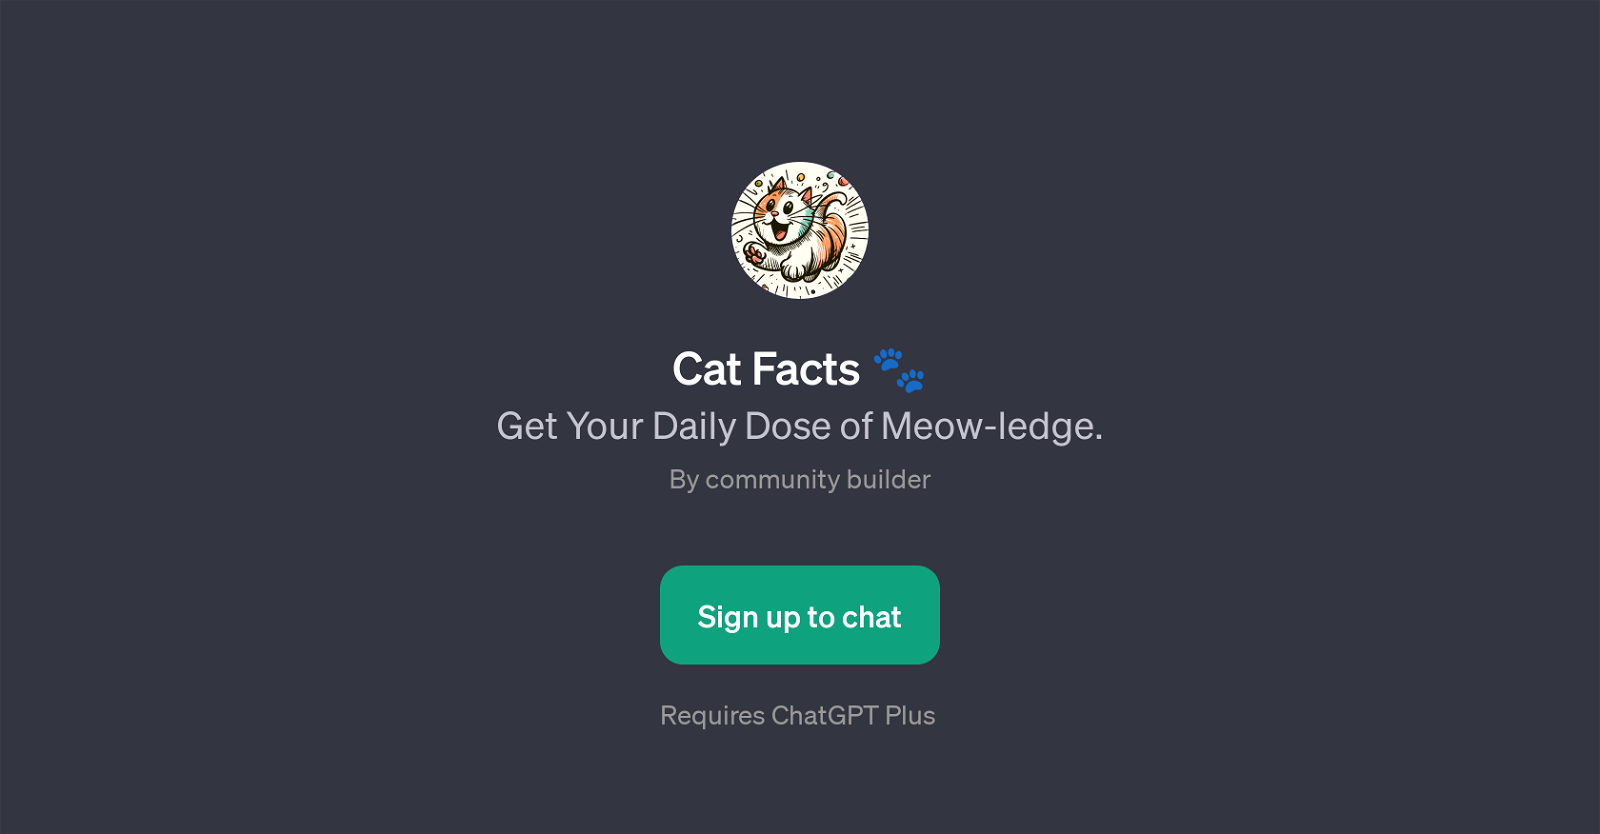 Cat Facts website